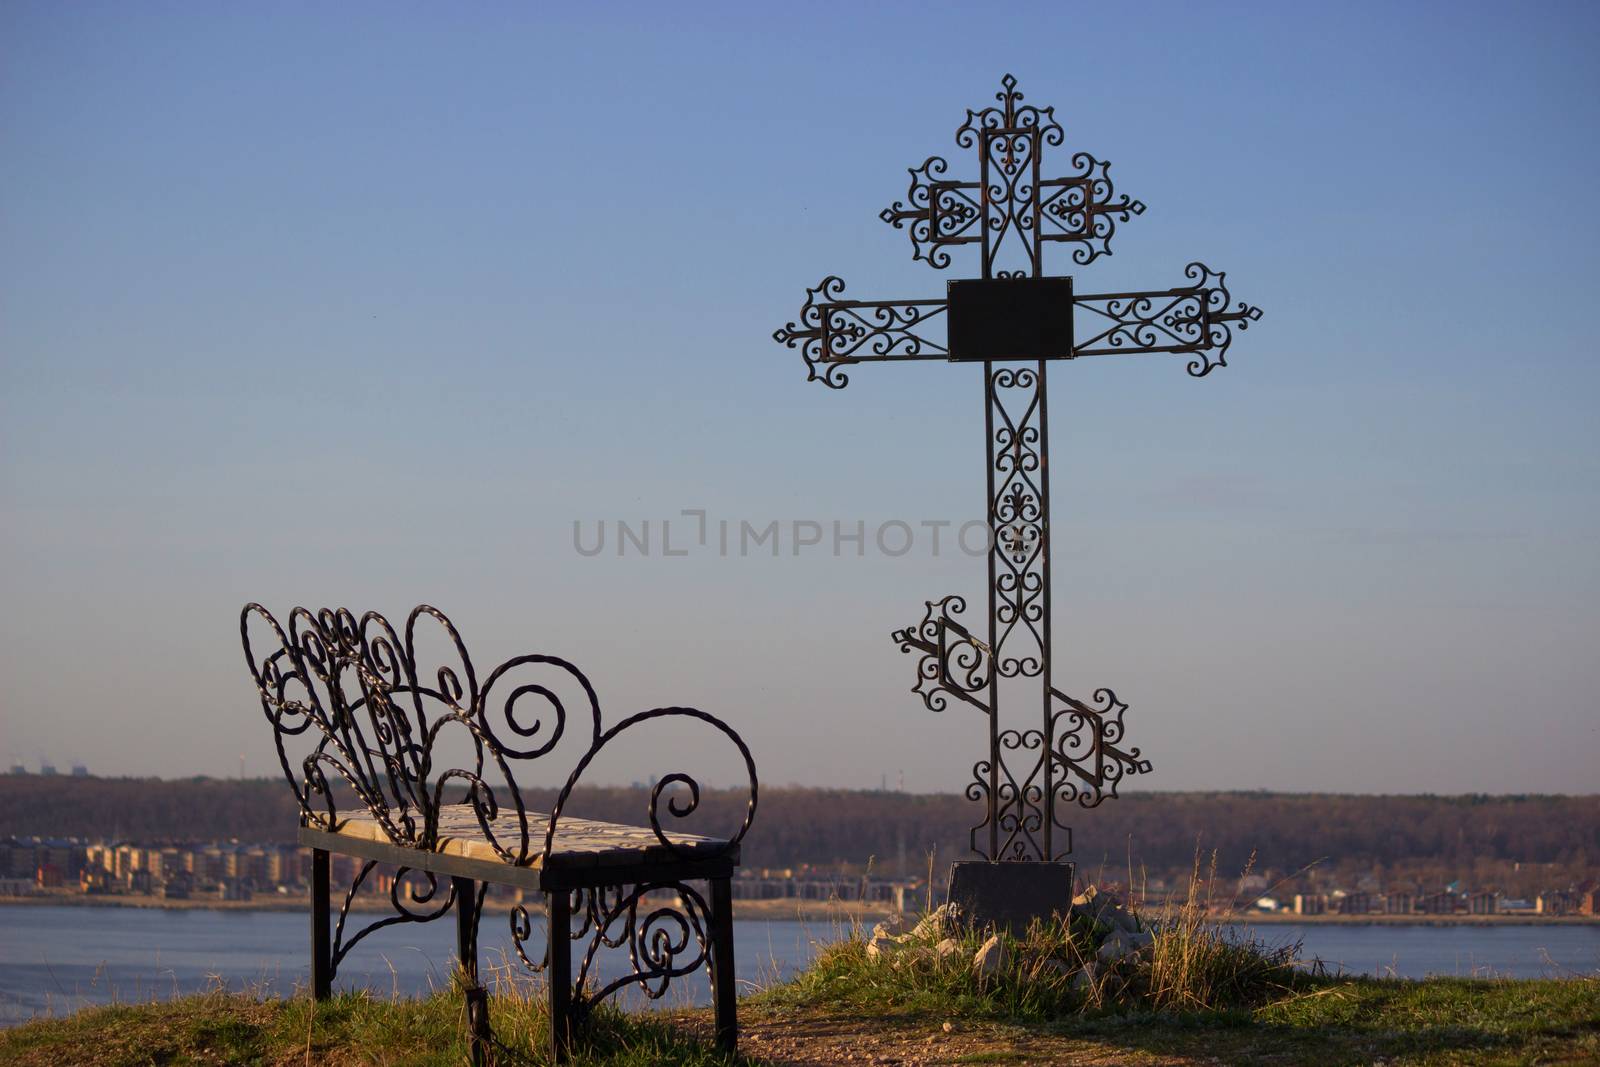 bench and metal ortodox cross. sorrow and sadness concept